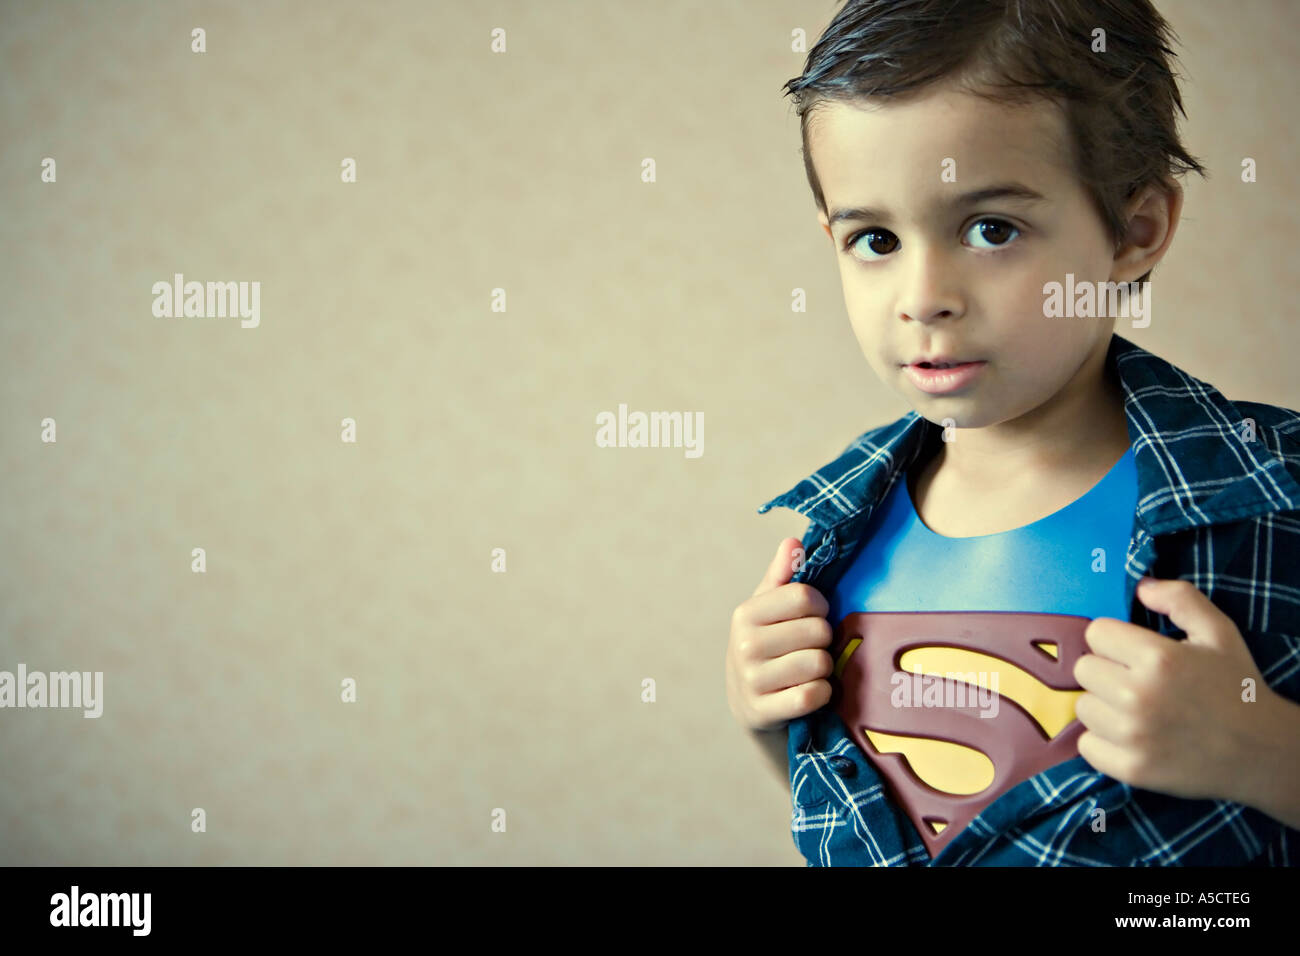 Child reveals Superman costume Stock Photo